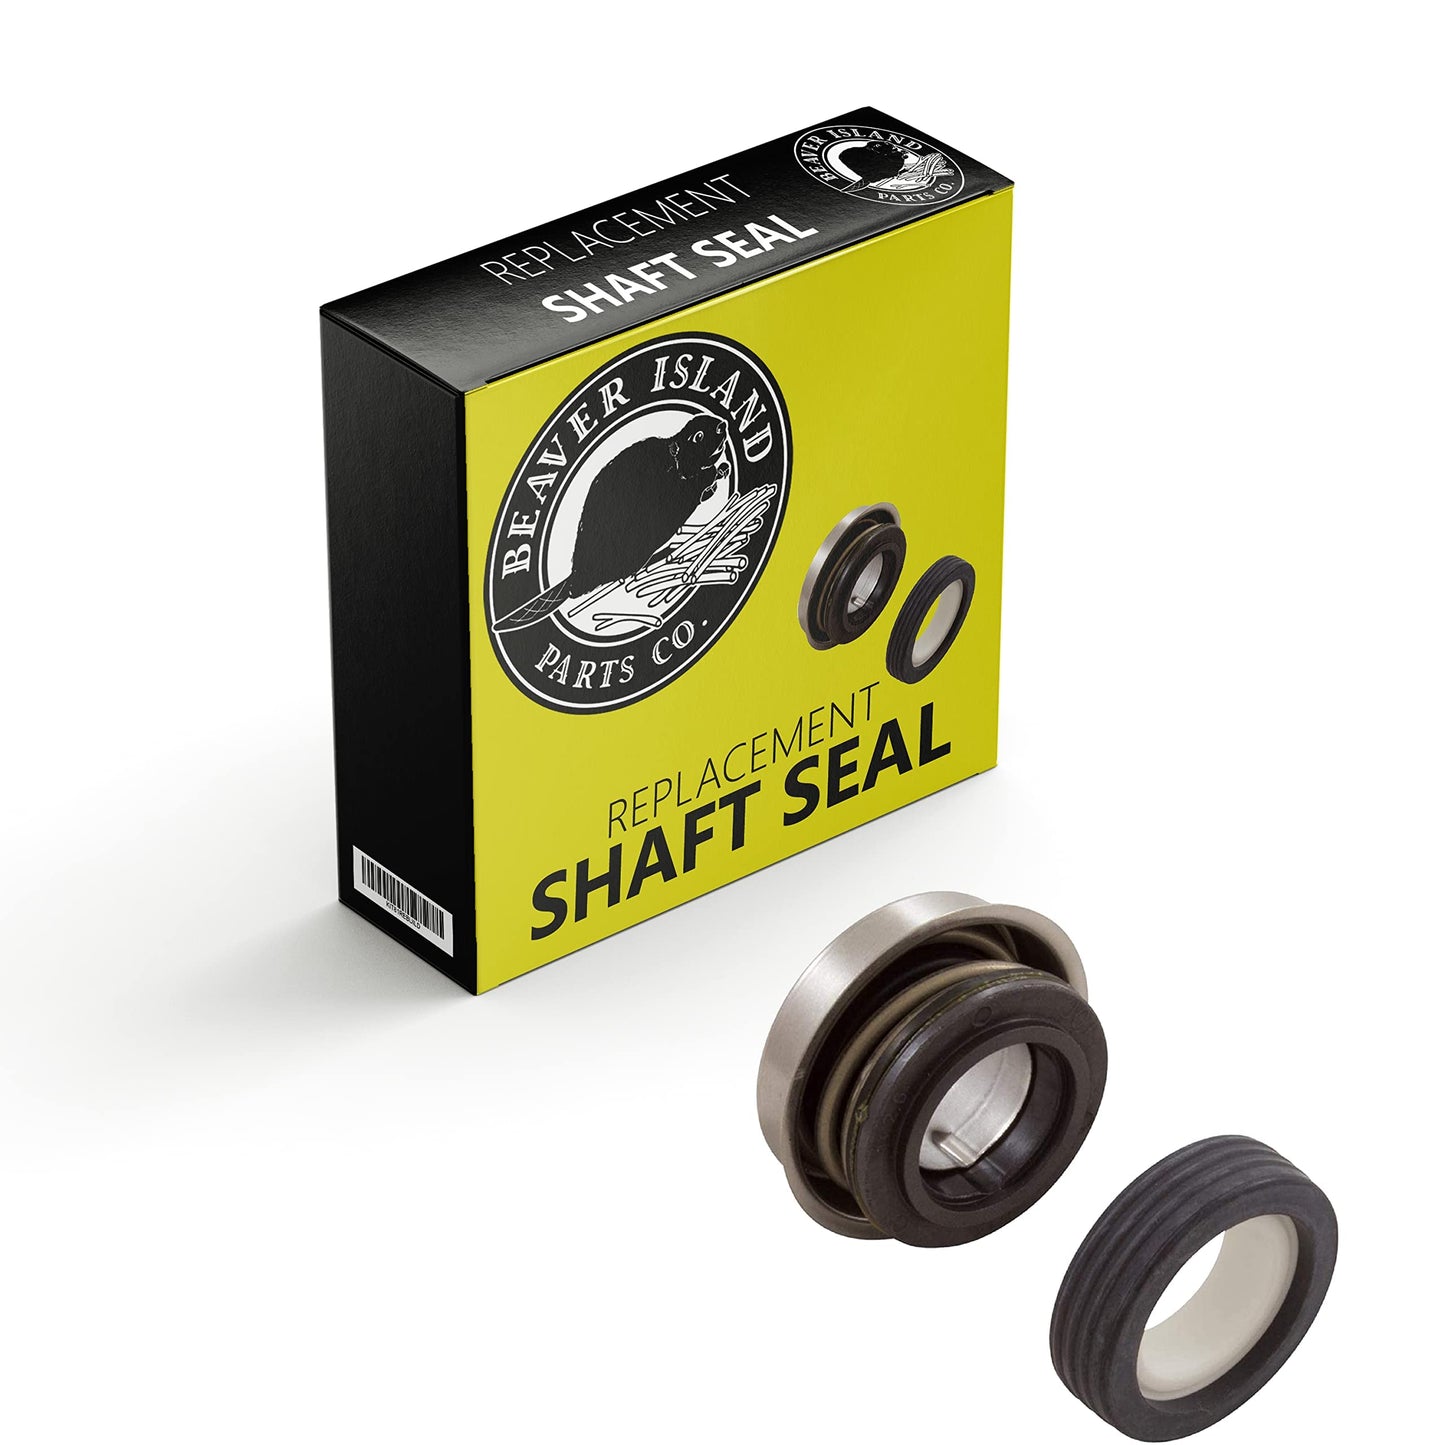 Shaft Seal Replacement for Aqua-Flo Dominator Pre 1995 92500050 Pump Motor Mechanical Seal